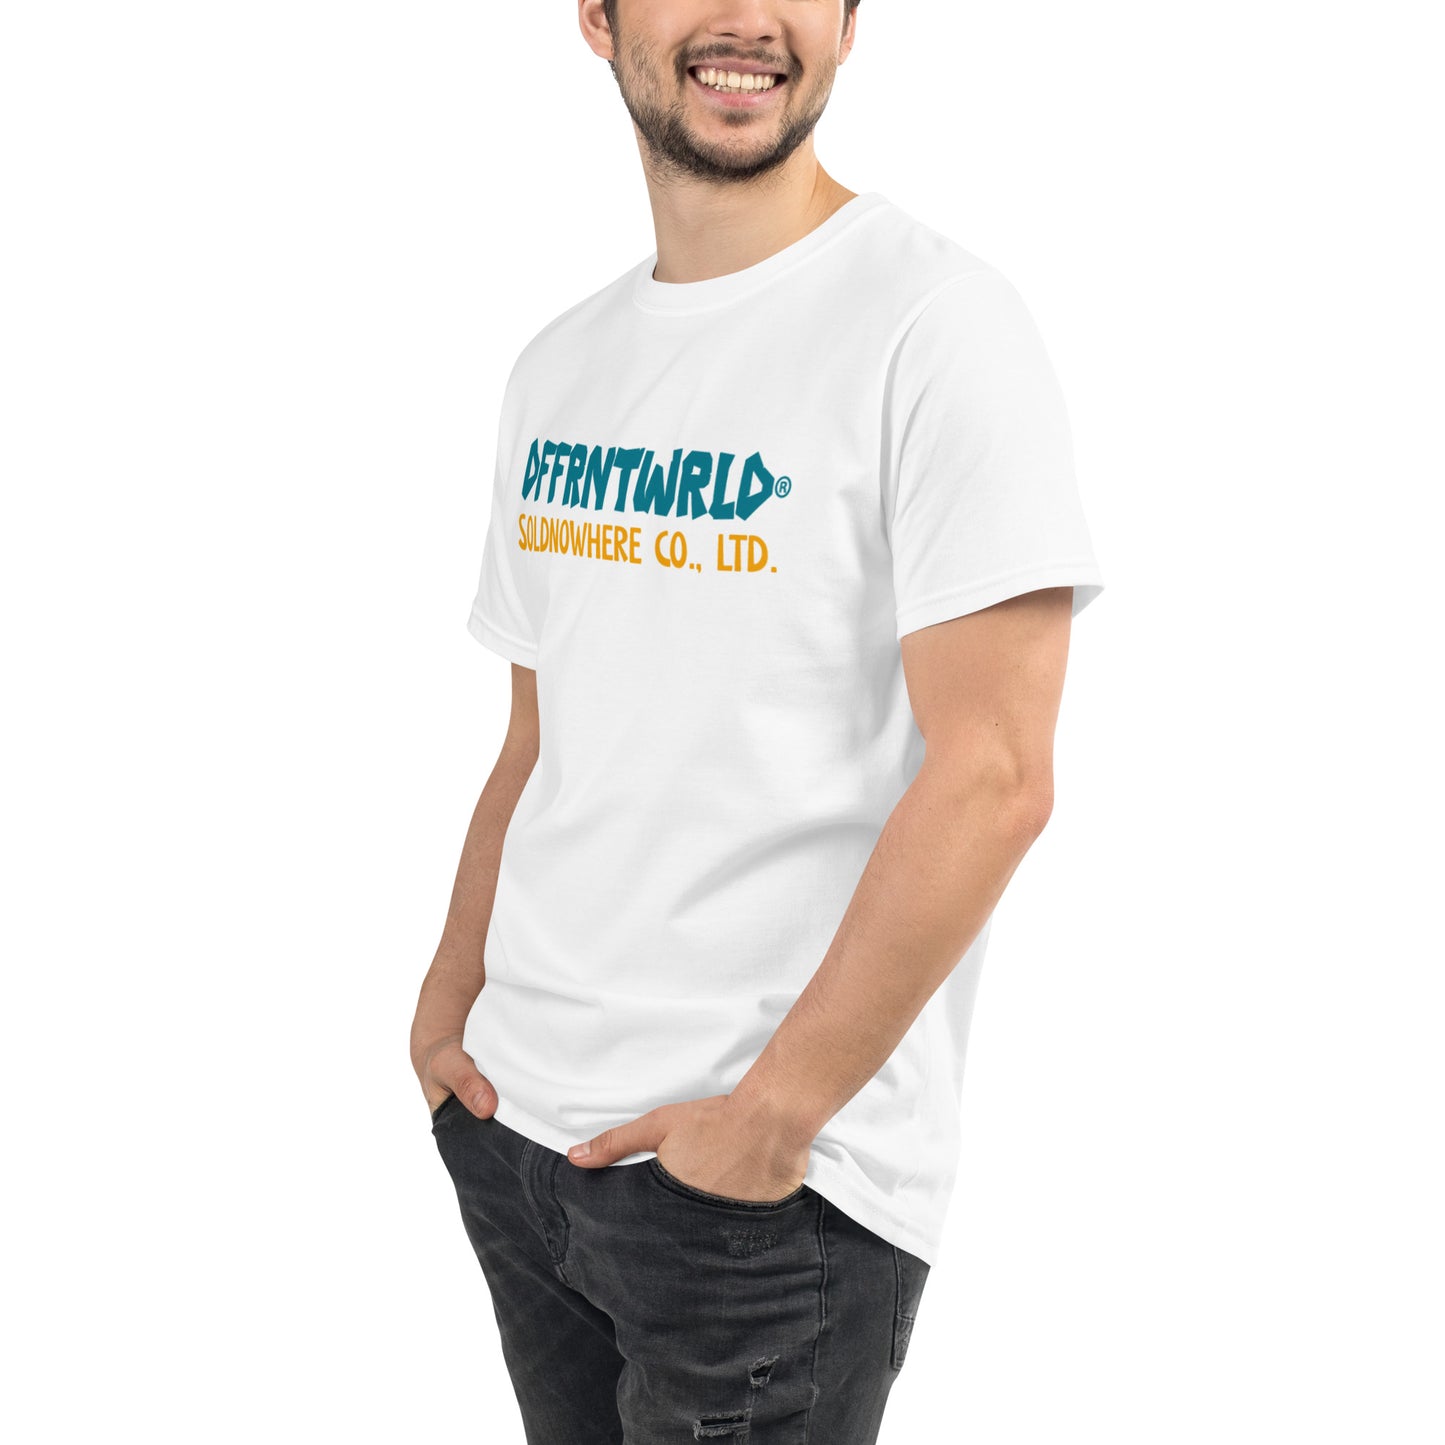 DFFRNTWRLD® Trading Post - Organic T-shirt